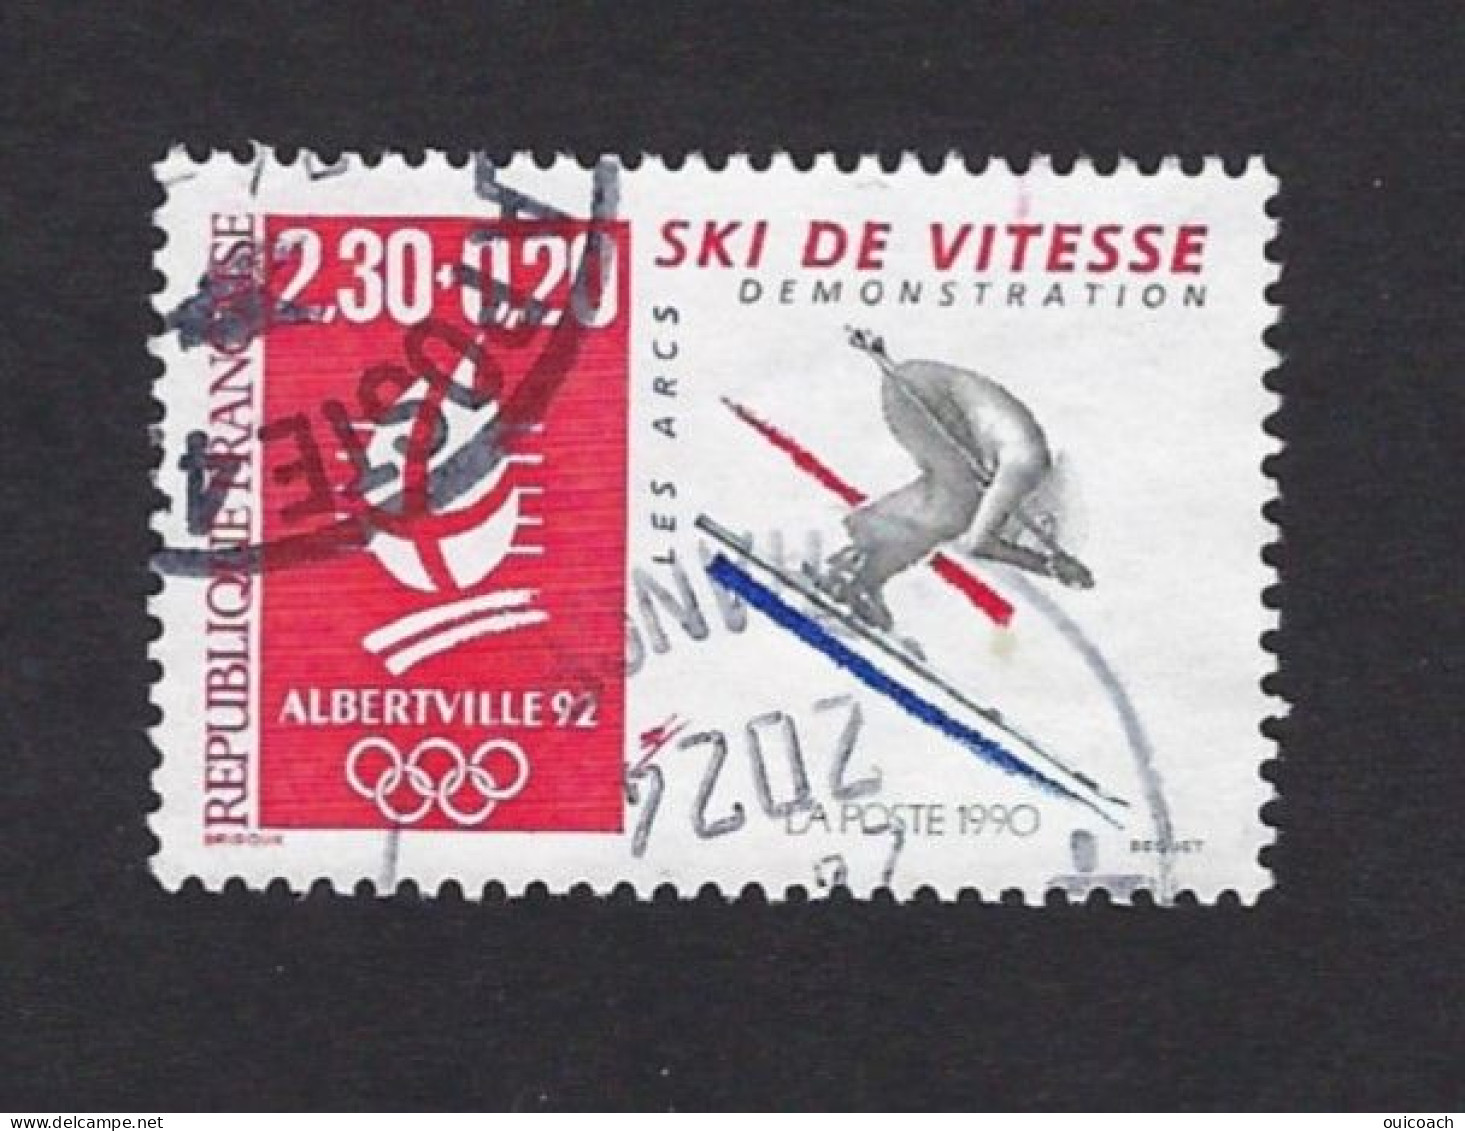 Ski Vitesse, Descente, 2675 - Hiver 1992: Albertville